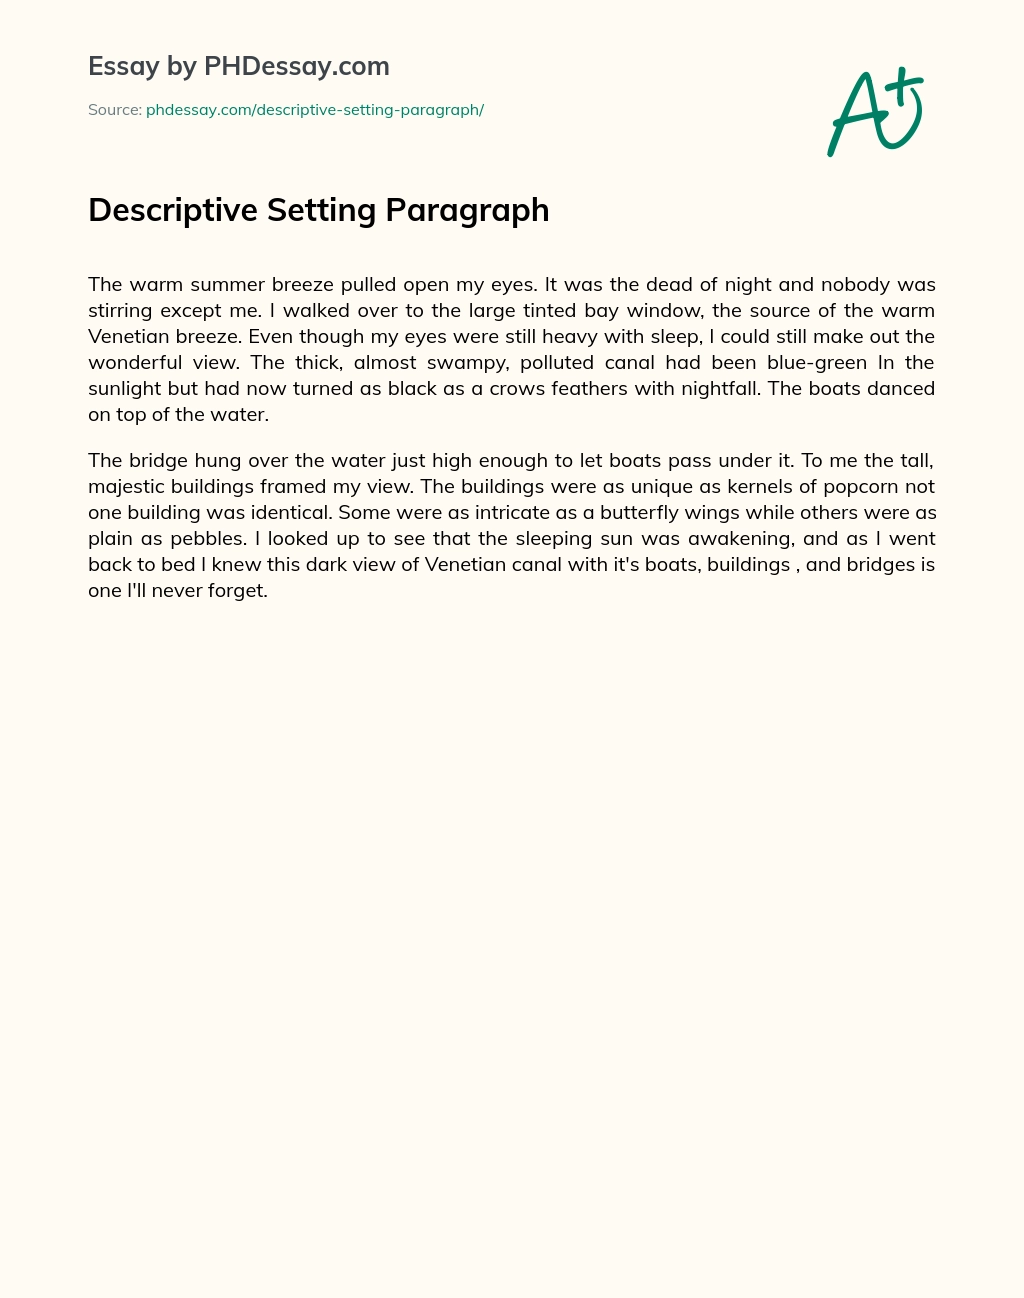 Descriptive Setting Paragraph essay